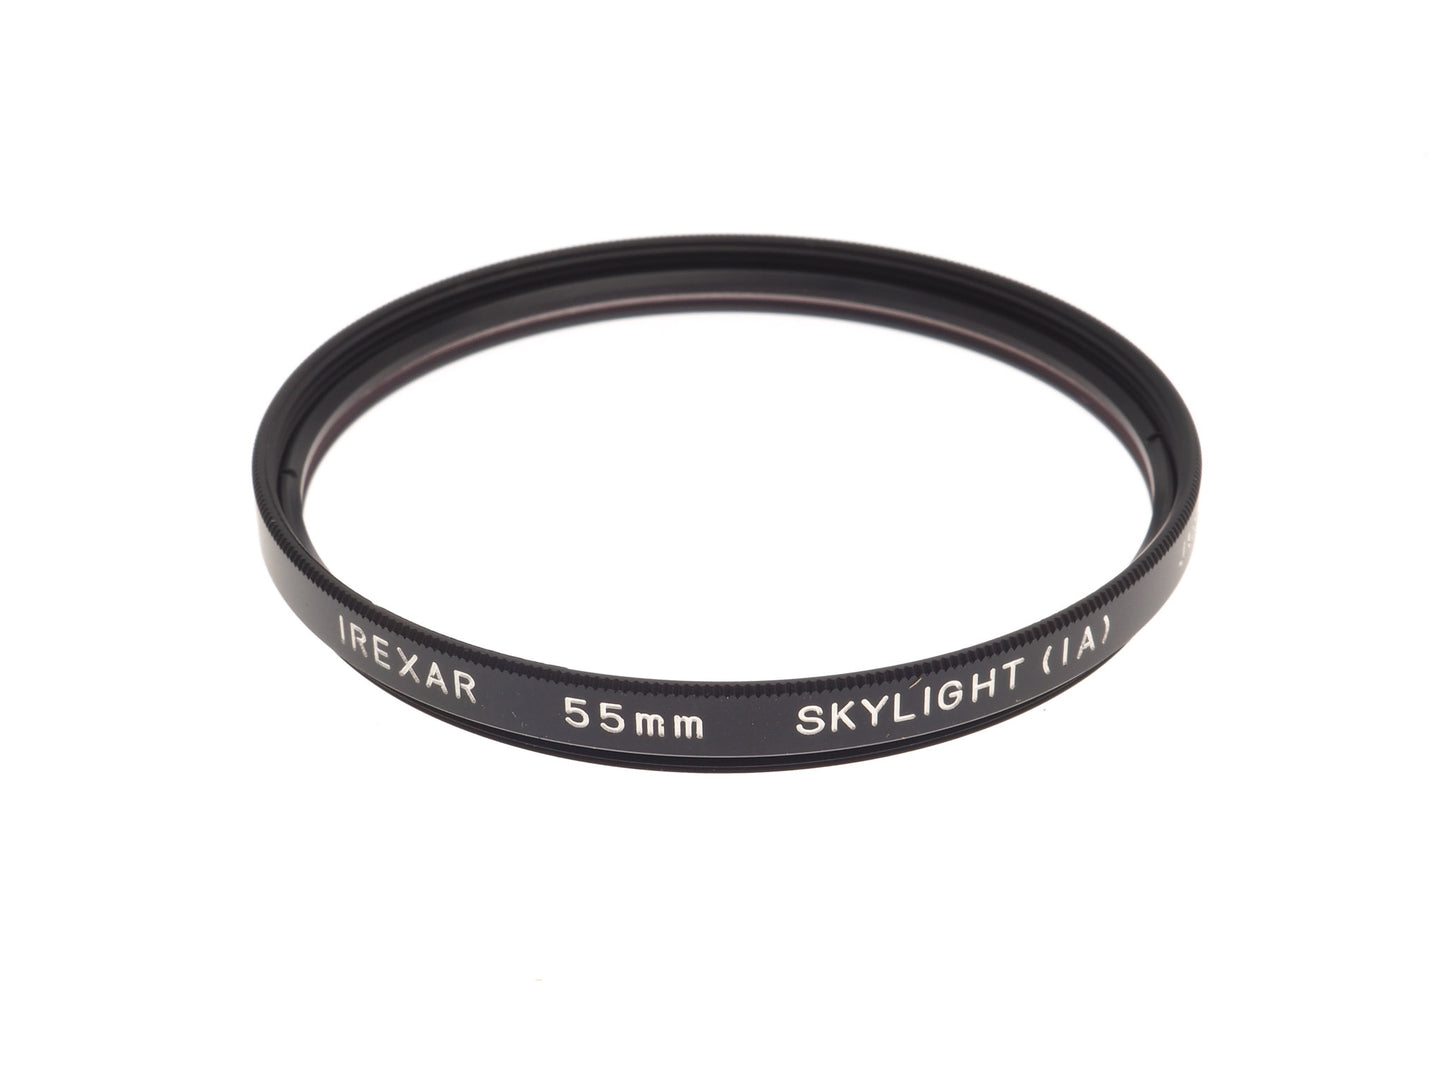 Irexar 55mm Skylight Filter 1A - Accessory